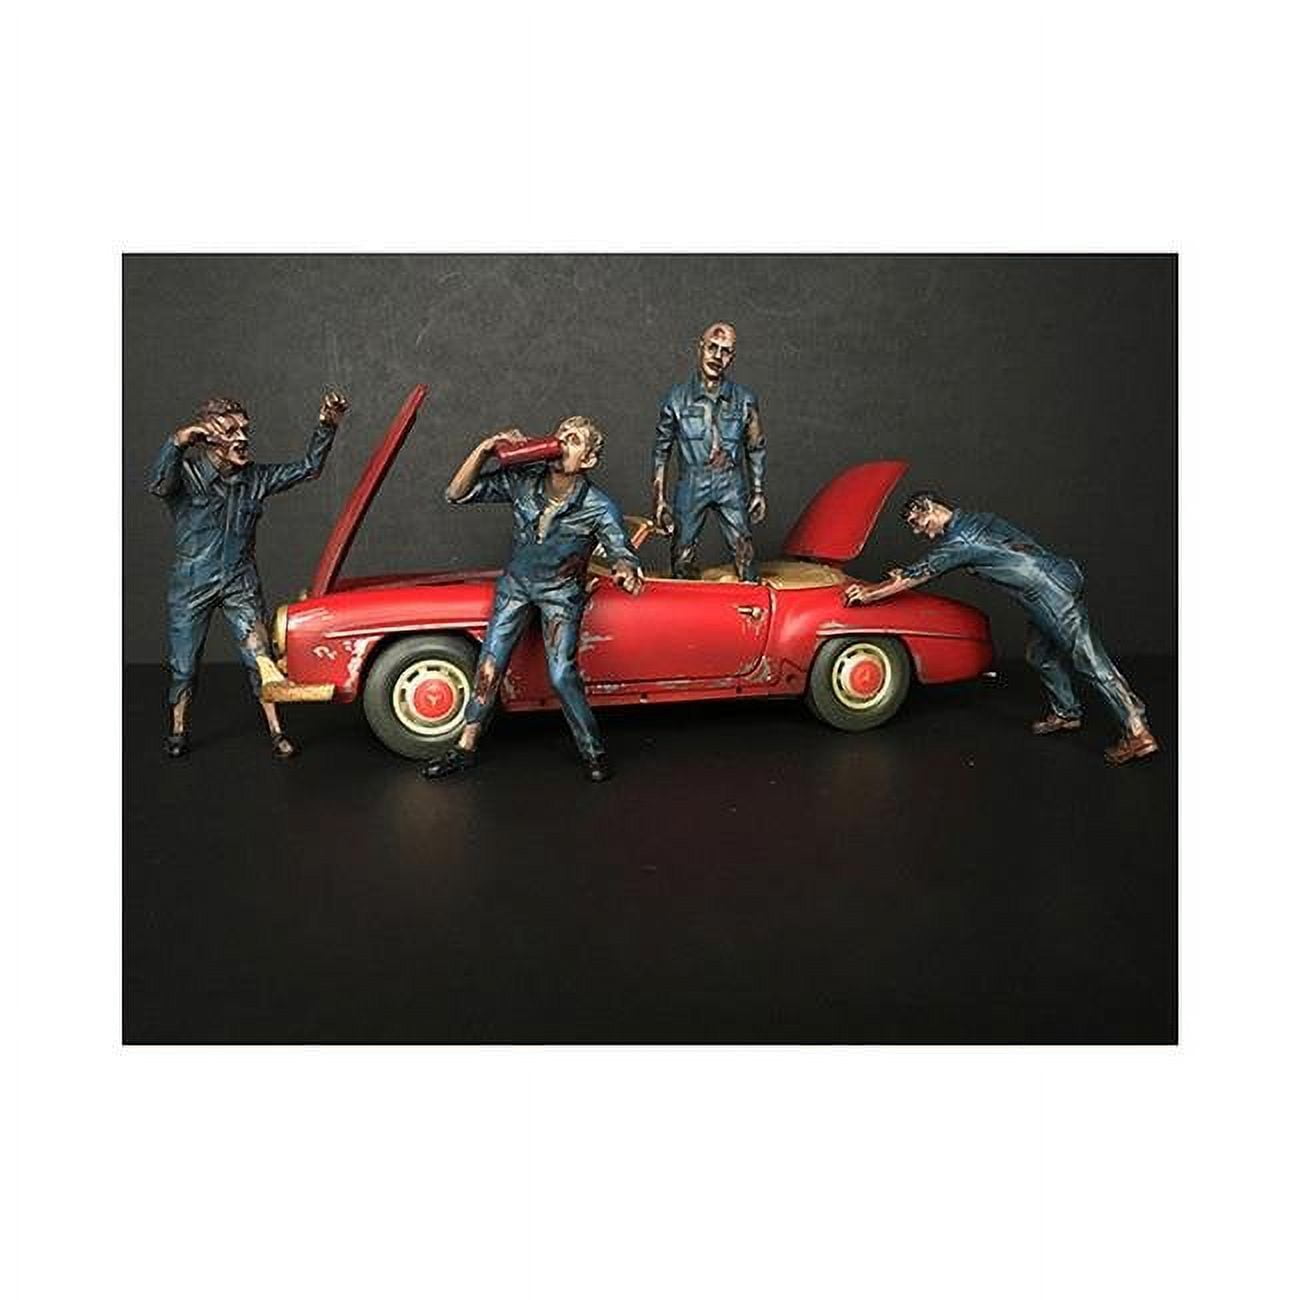 38297-38298-38299-38300 Zombie Mechanics Got Zombies Figurine Set For 1 By 24 Scale Models - 4 Piece